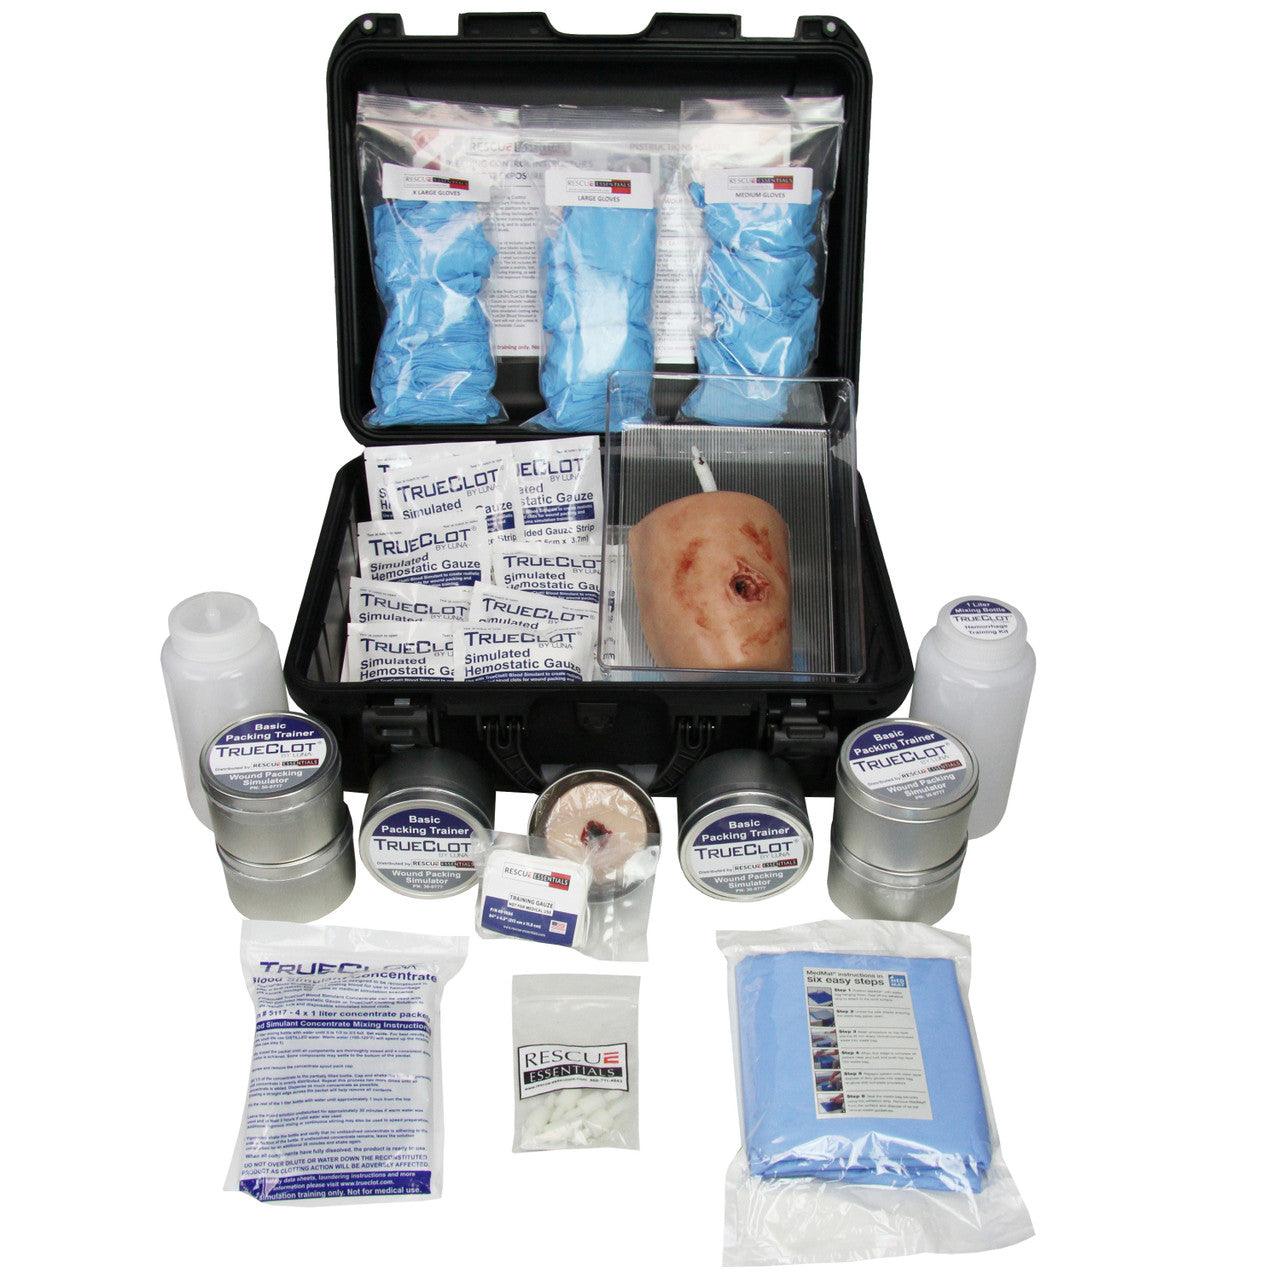 Bleeding Control Instructor's Kit - Basic Packing Trainer - Vendor